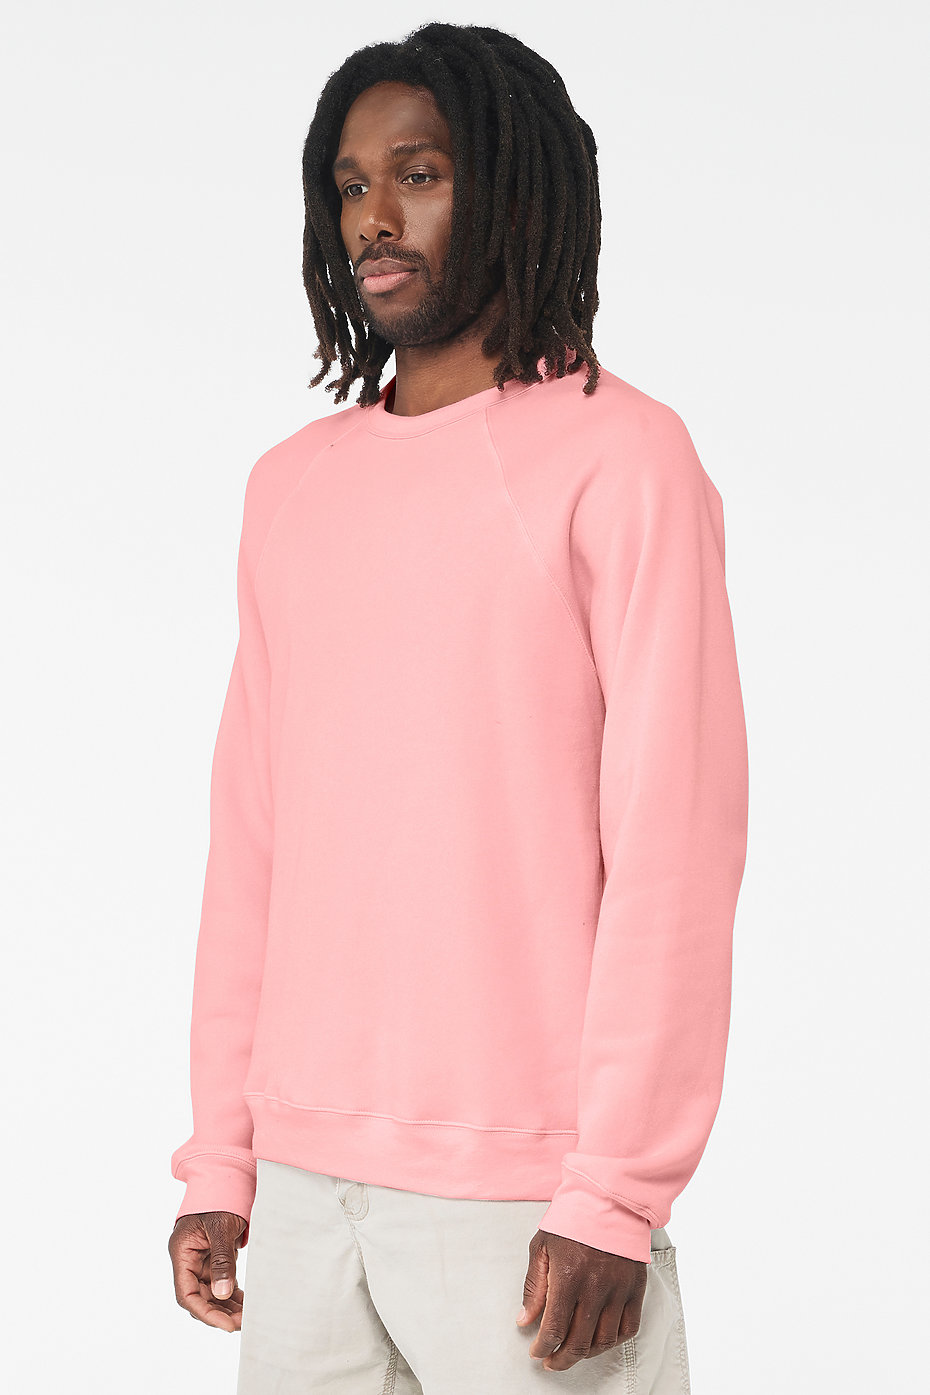 Custom Sweatshirts For Men | Wholesale Crewneck Sweatshirts